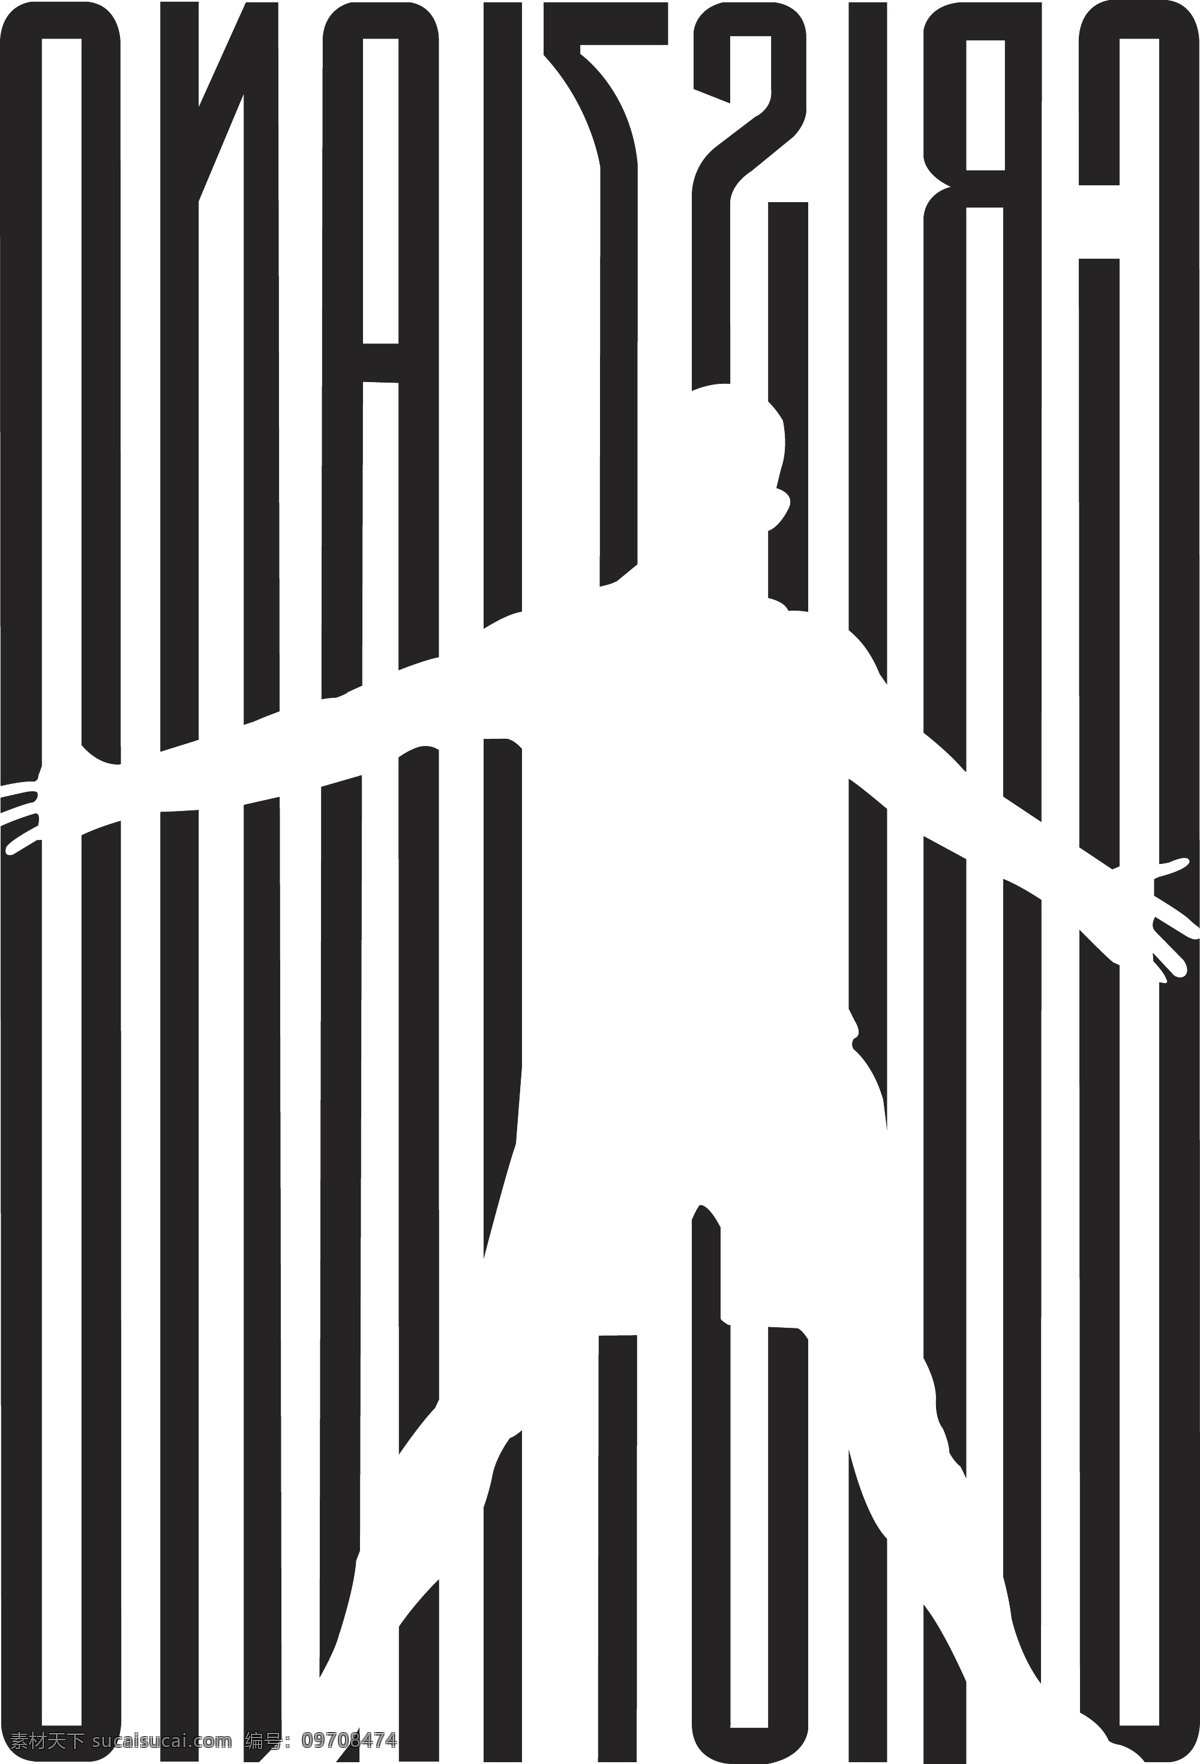 c罗标志 c罗 标志 logo 皇马 足球运动员 标志图标 企业